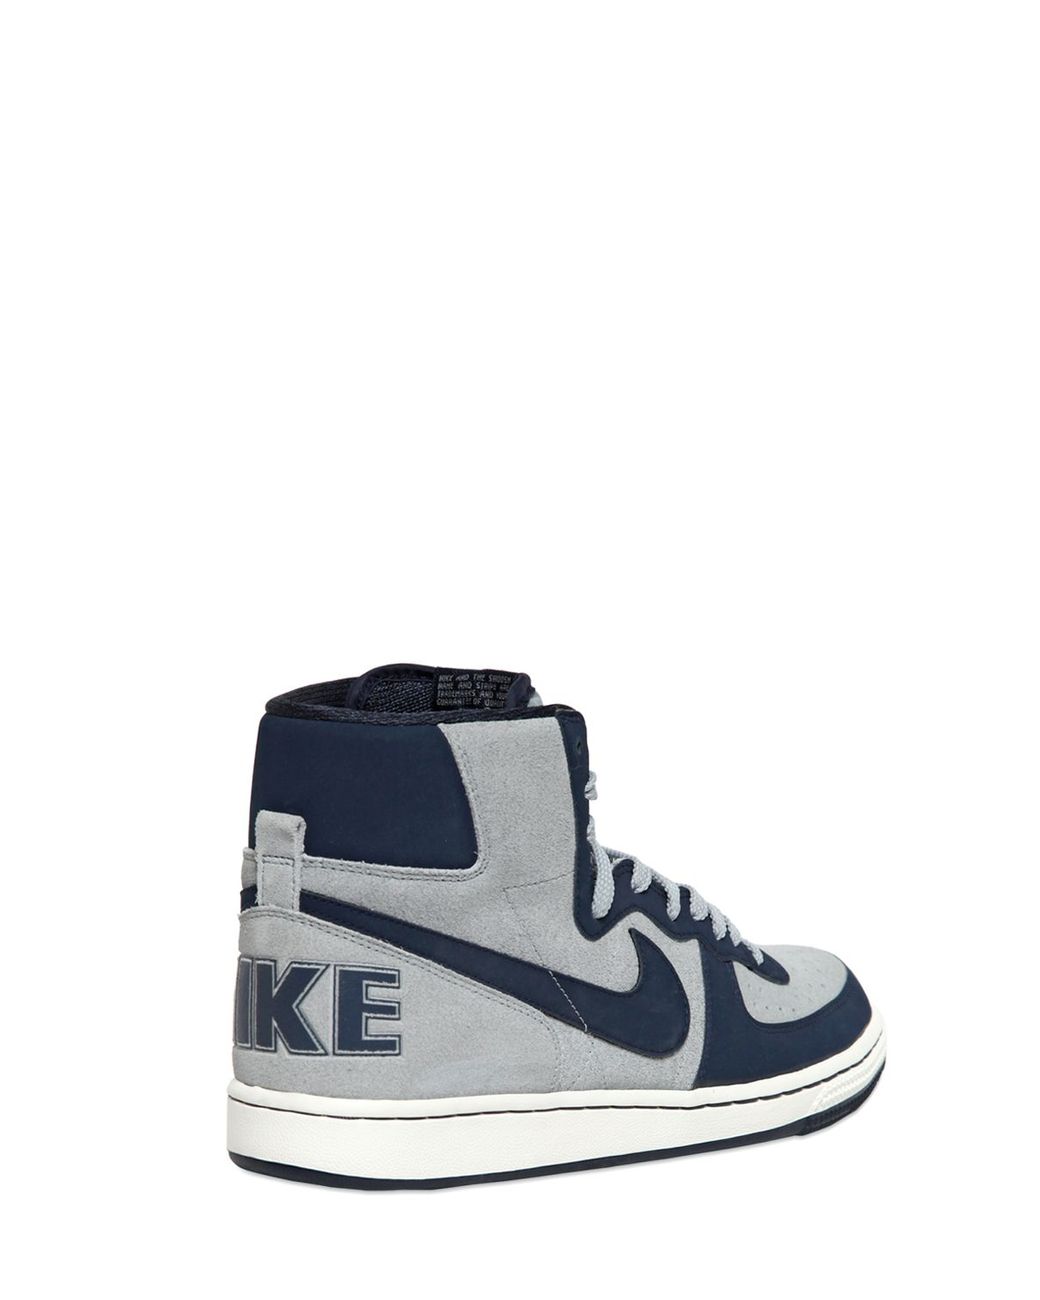 Nike Terminator vintage high top nikes Vintage High Top Sneakers in Grey/Navy (Blue) for